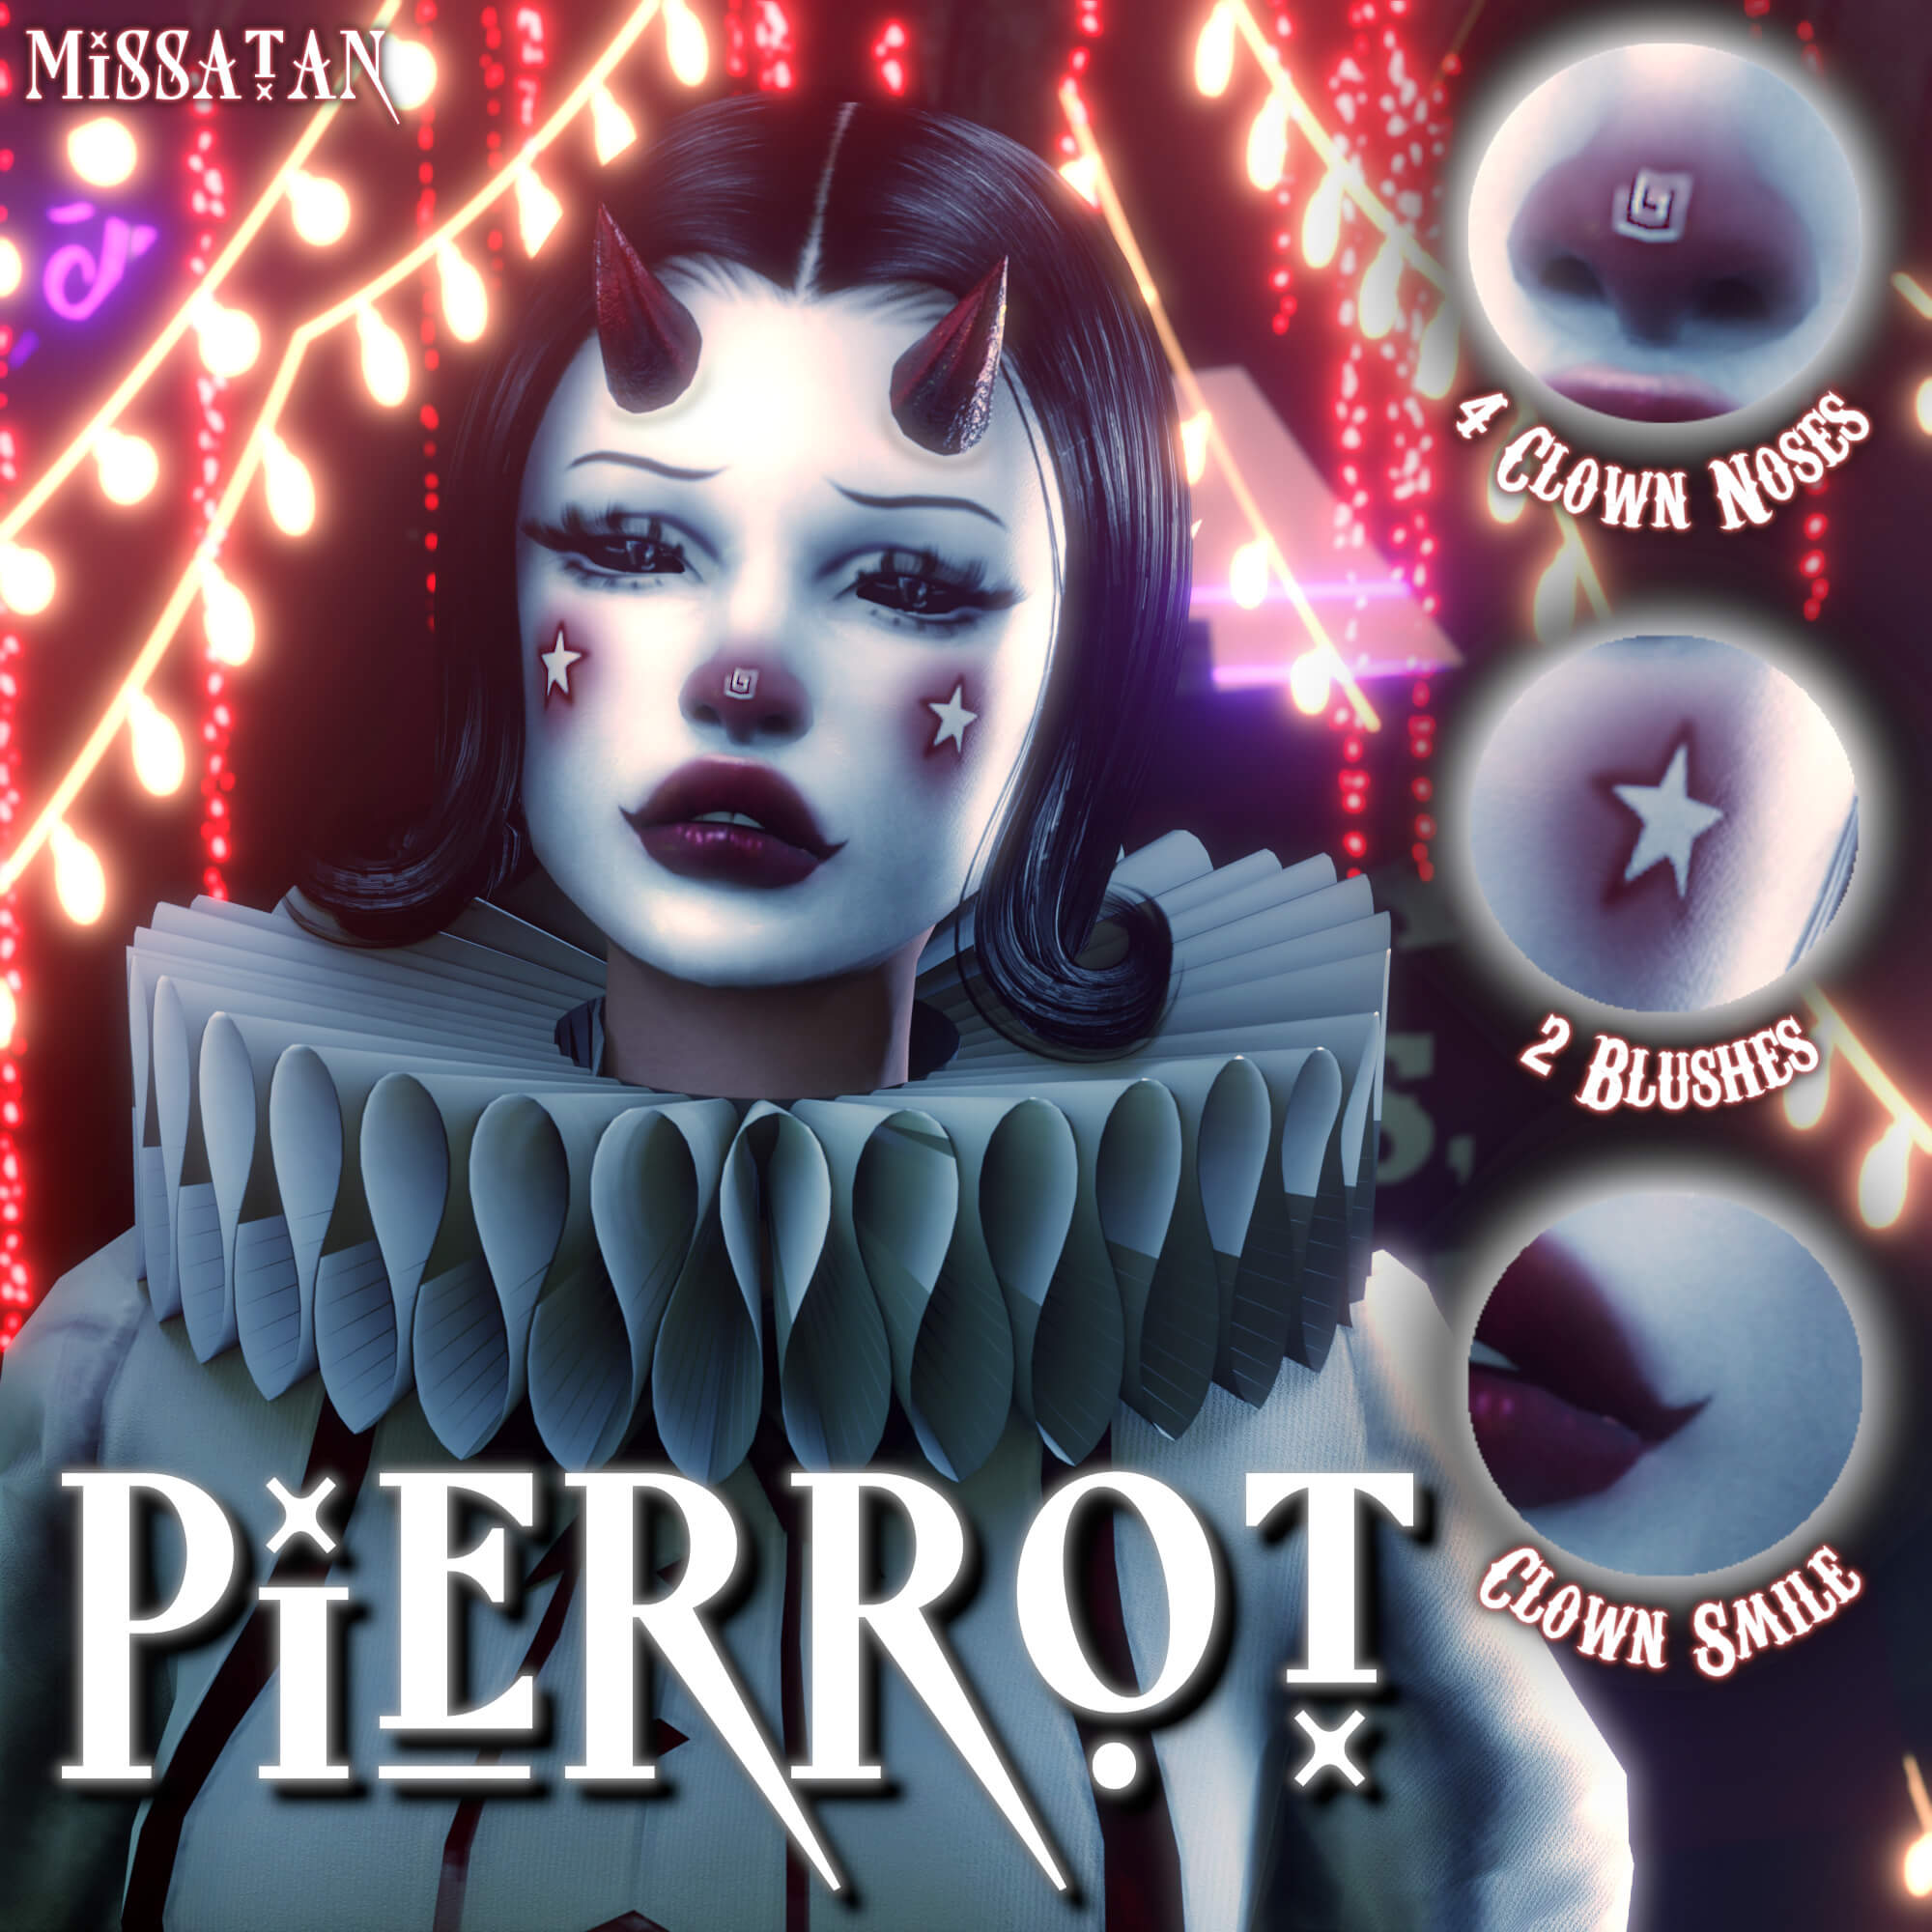 Pierrot by Missatan - Best Sims Mods